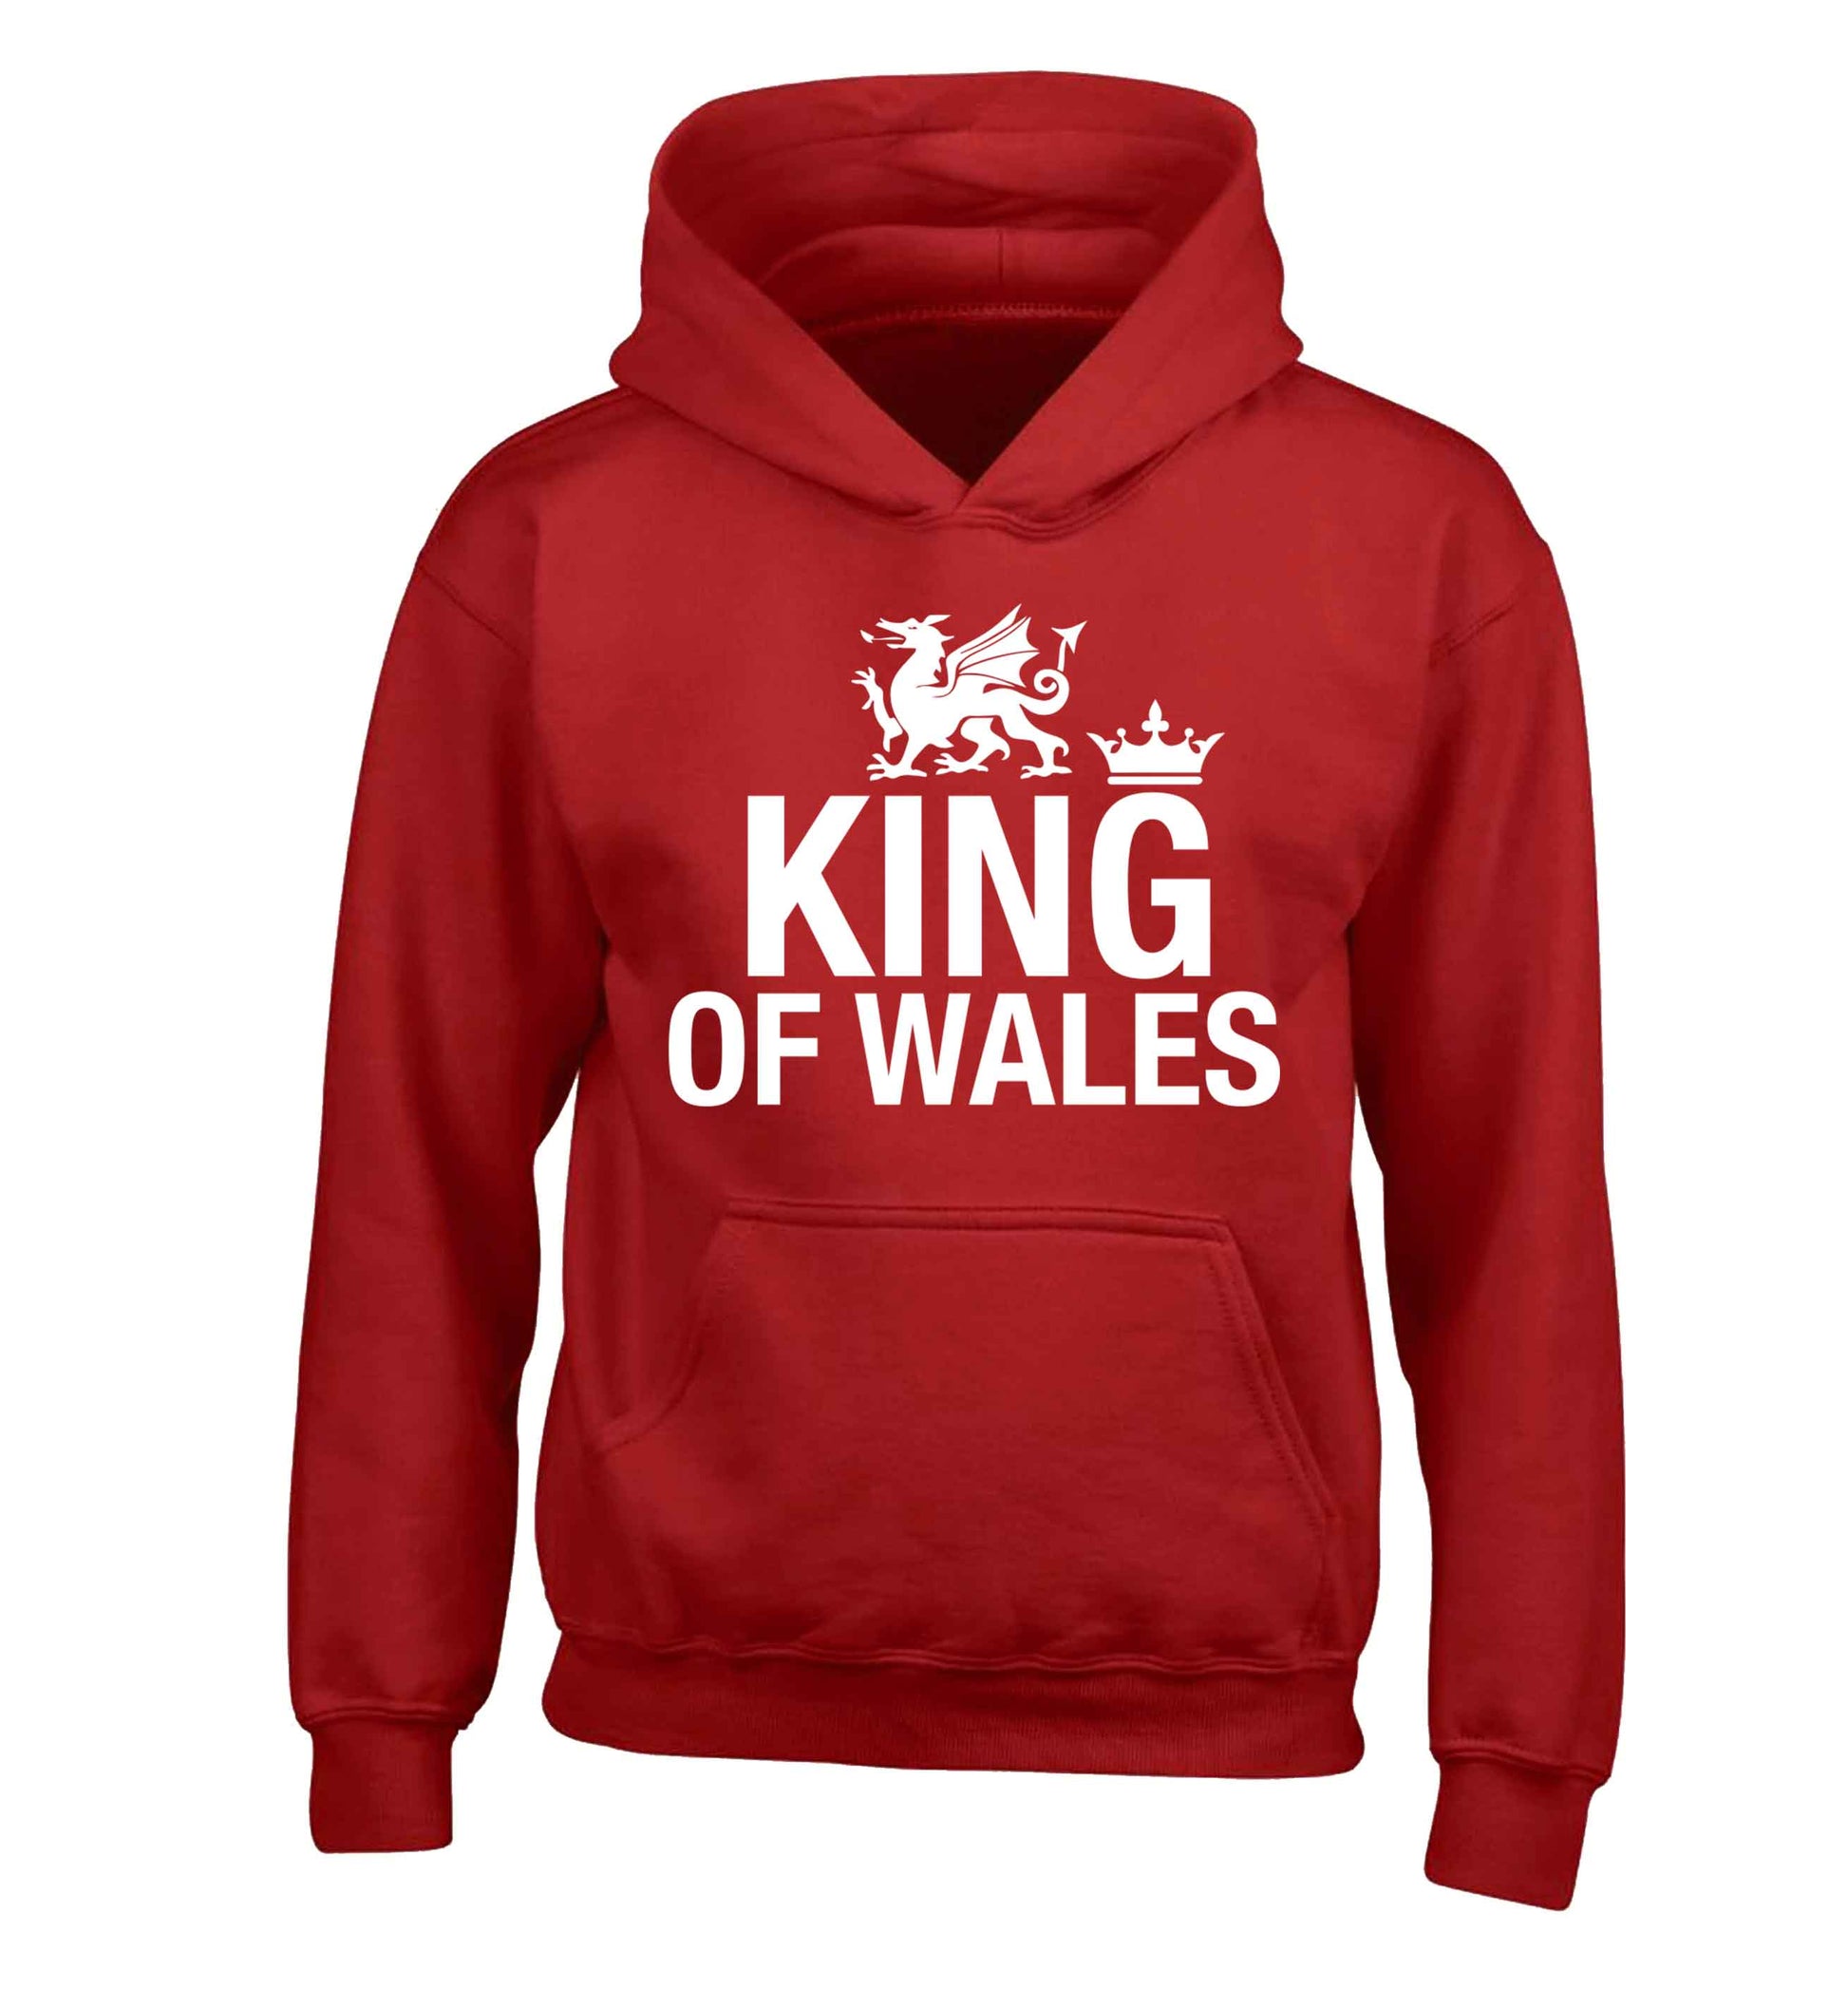 King of Wales children's red hoodie 12-13 Years